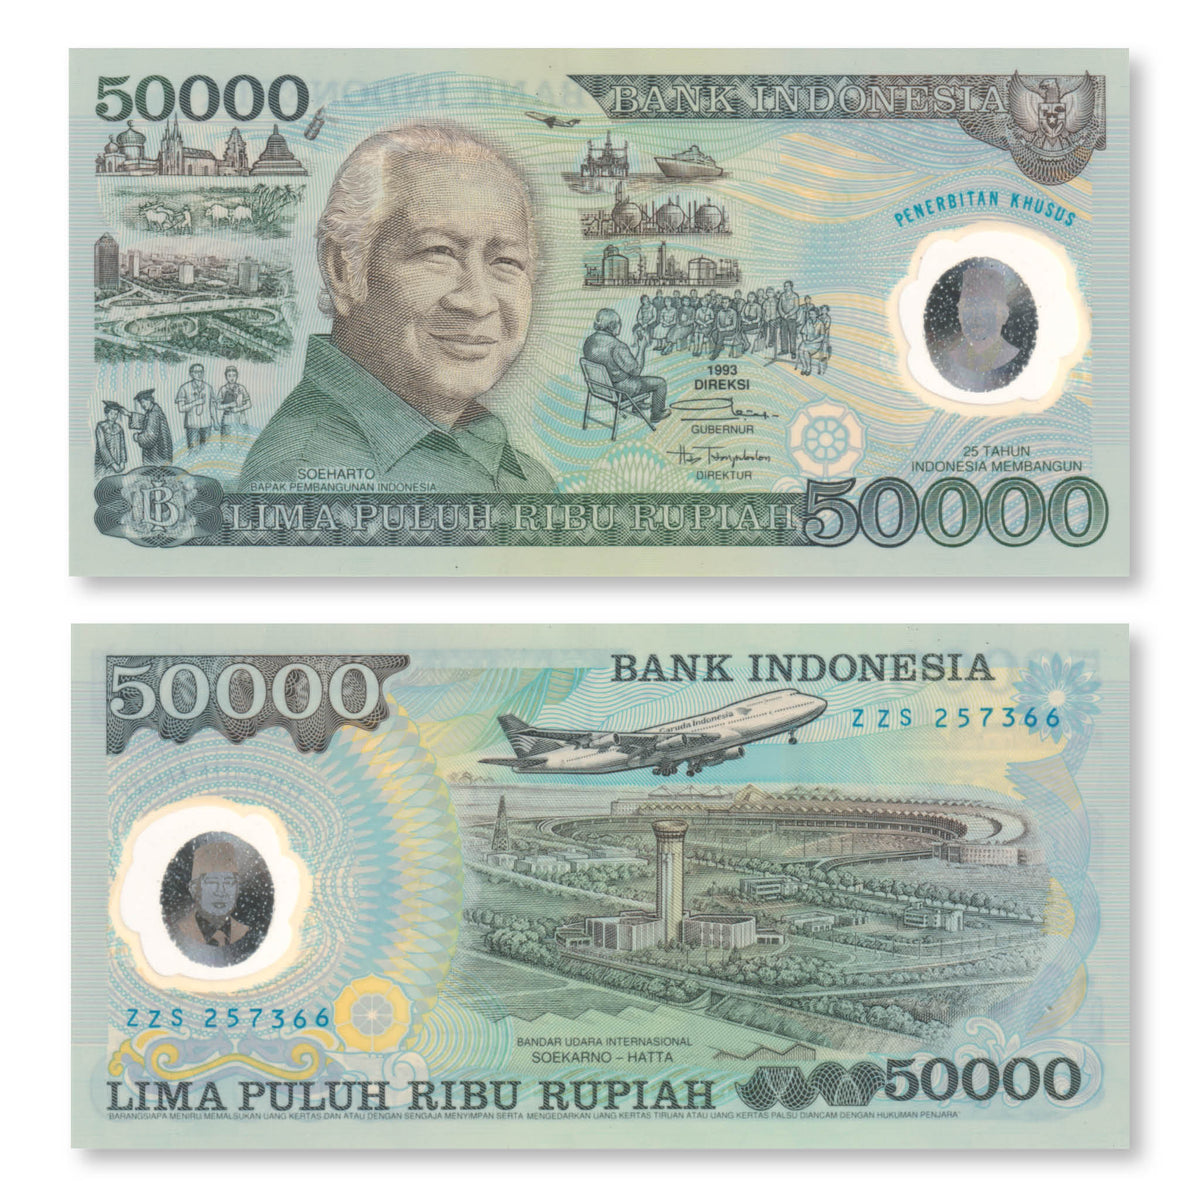 Indonesia 50000 Rupiah, 1993, B591a, P134a, UNC - Robert's World Money - World Banknotes